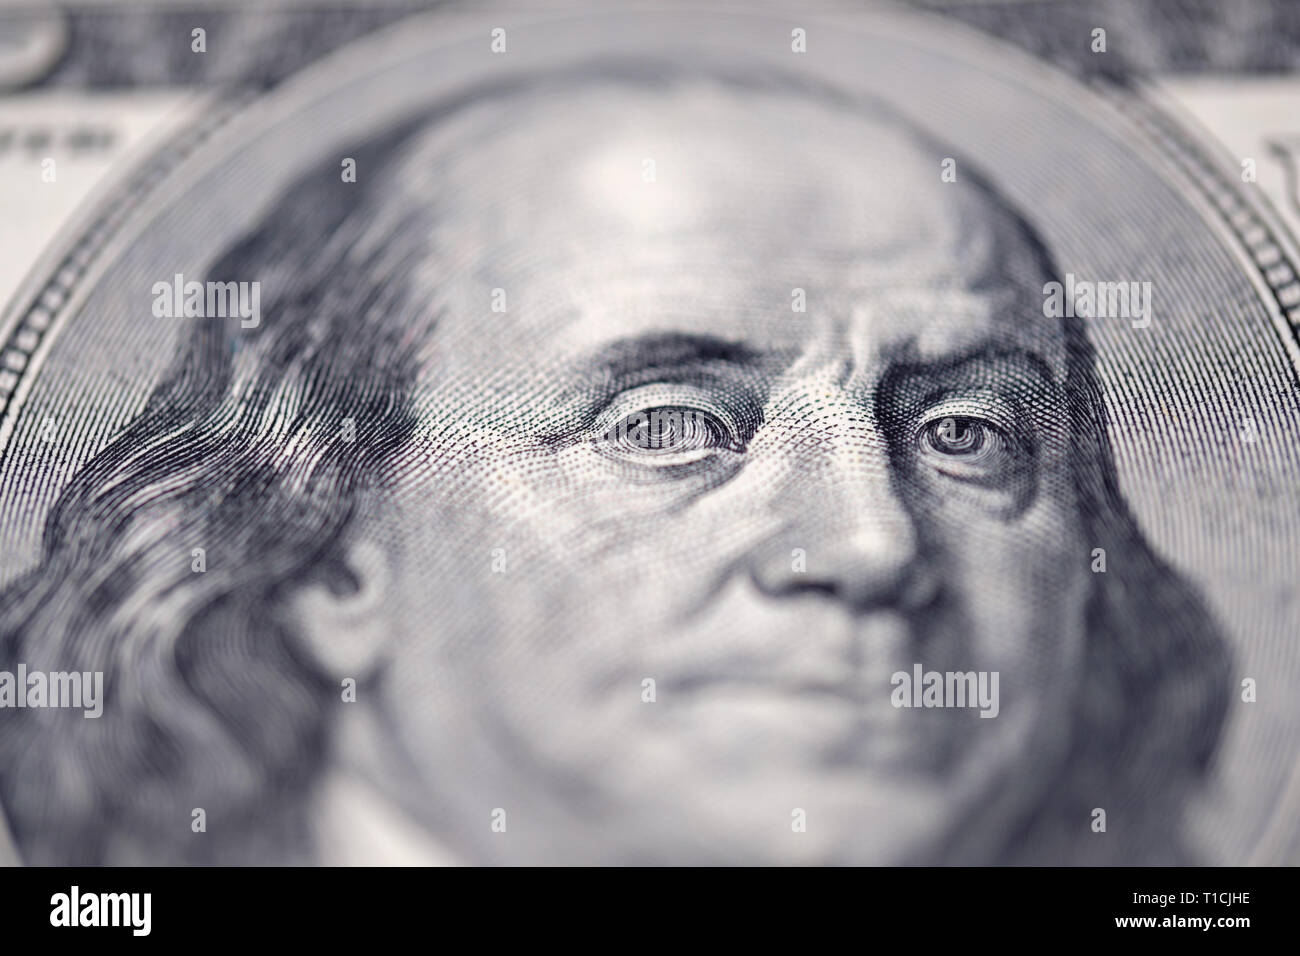 Benjamin Franklin on hundred dollars banknote. Selective focus on eyes. Stock Photo